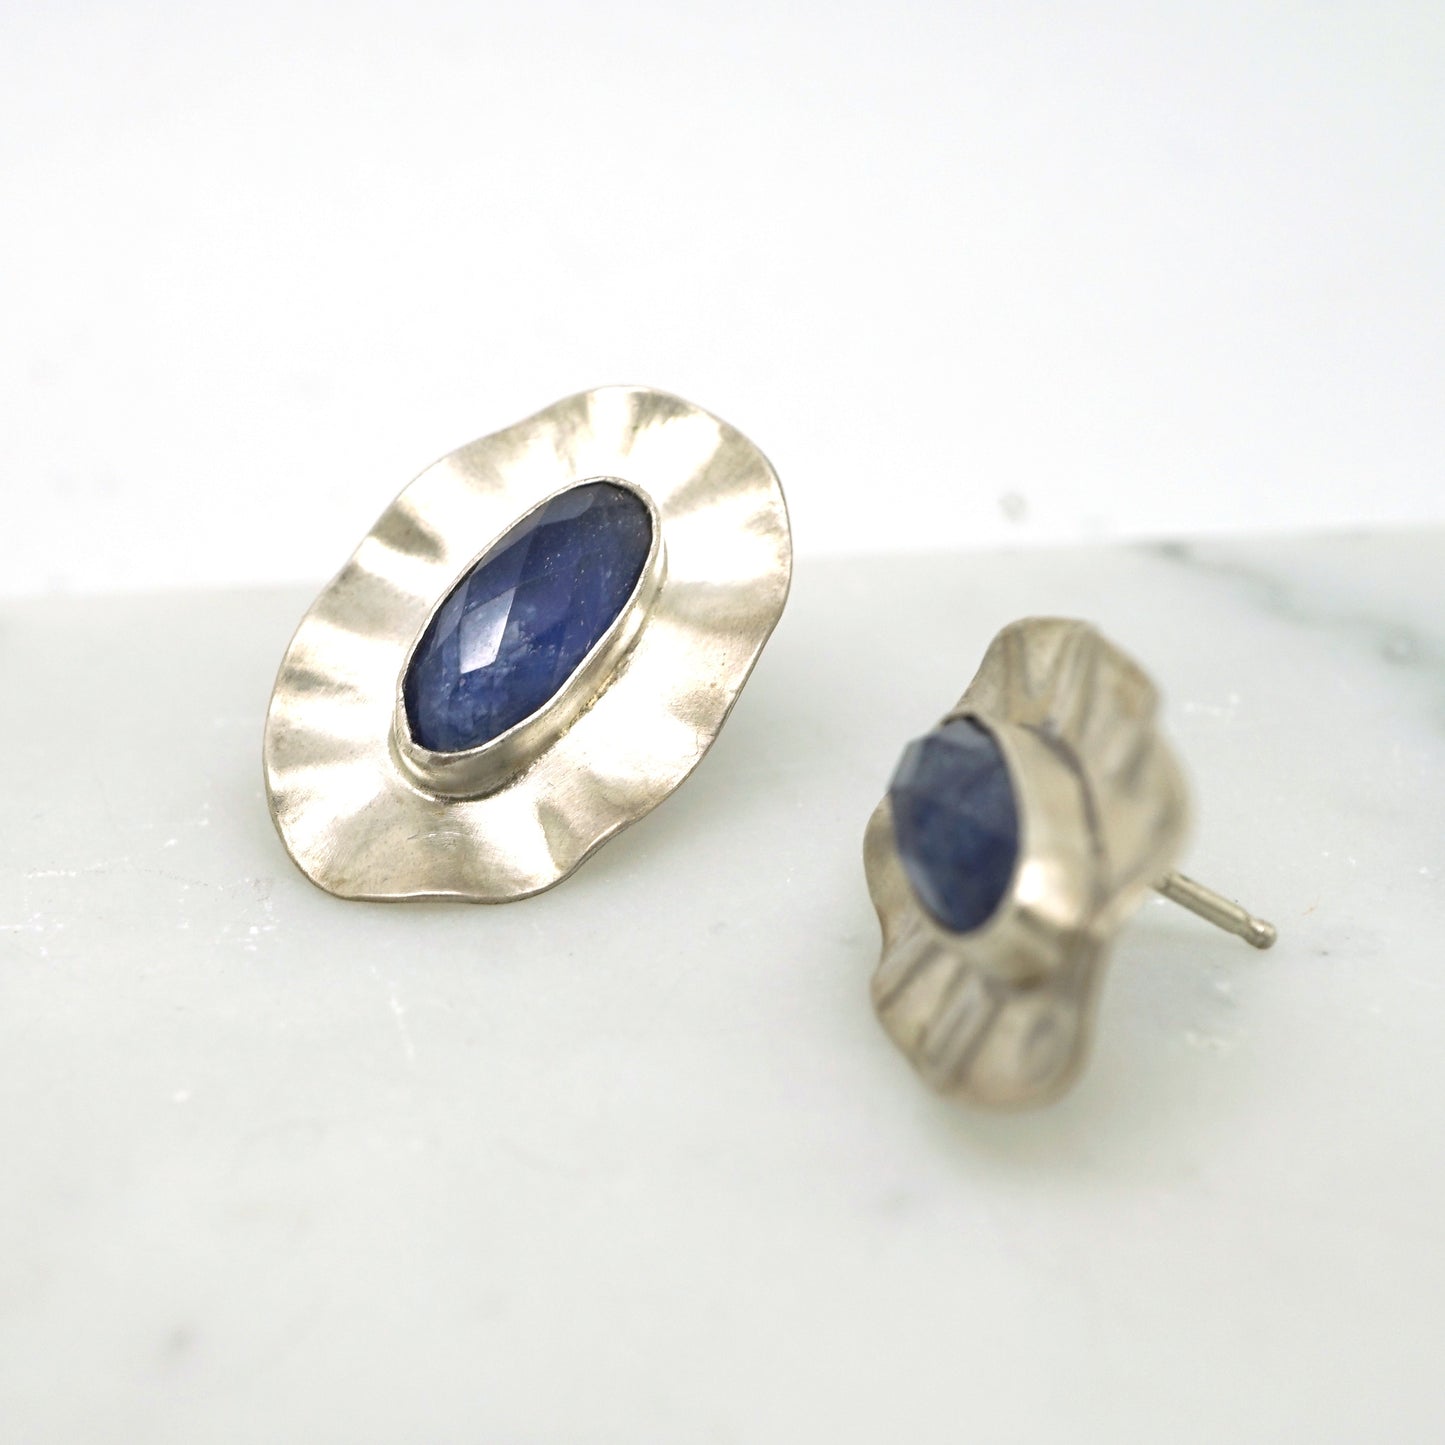 Ruffle stud earrings with blue sapphire